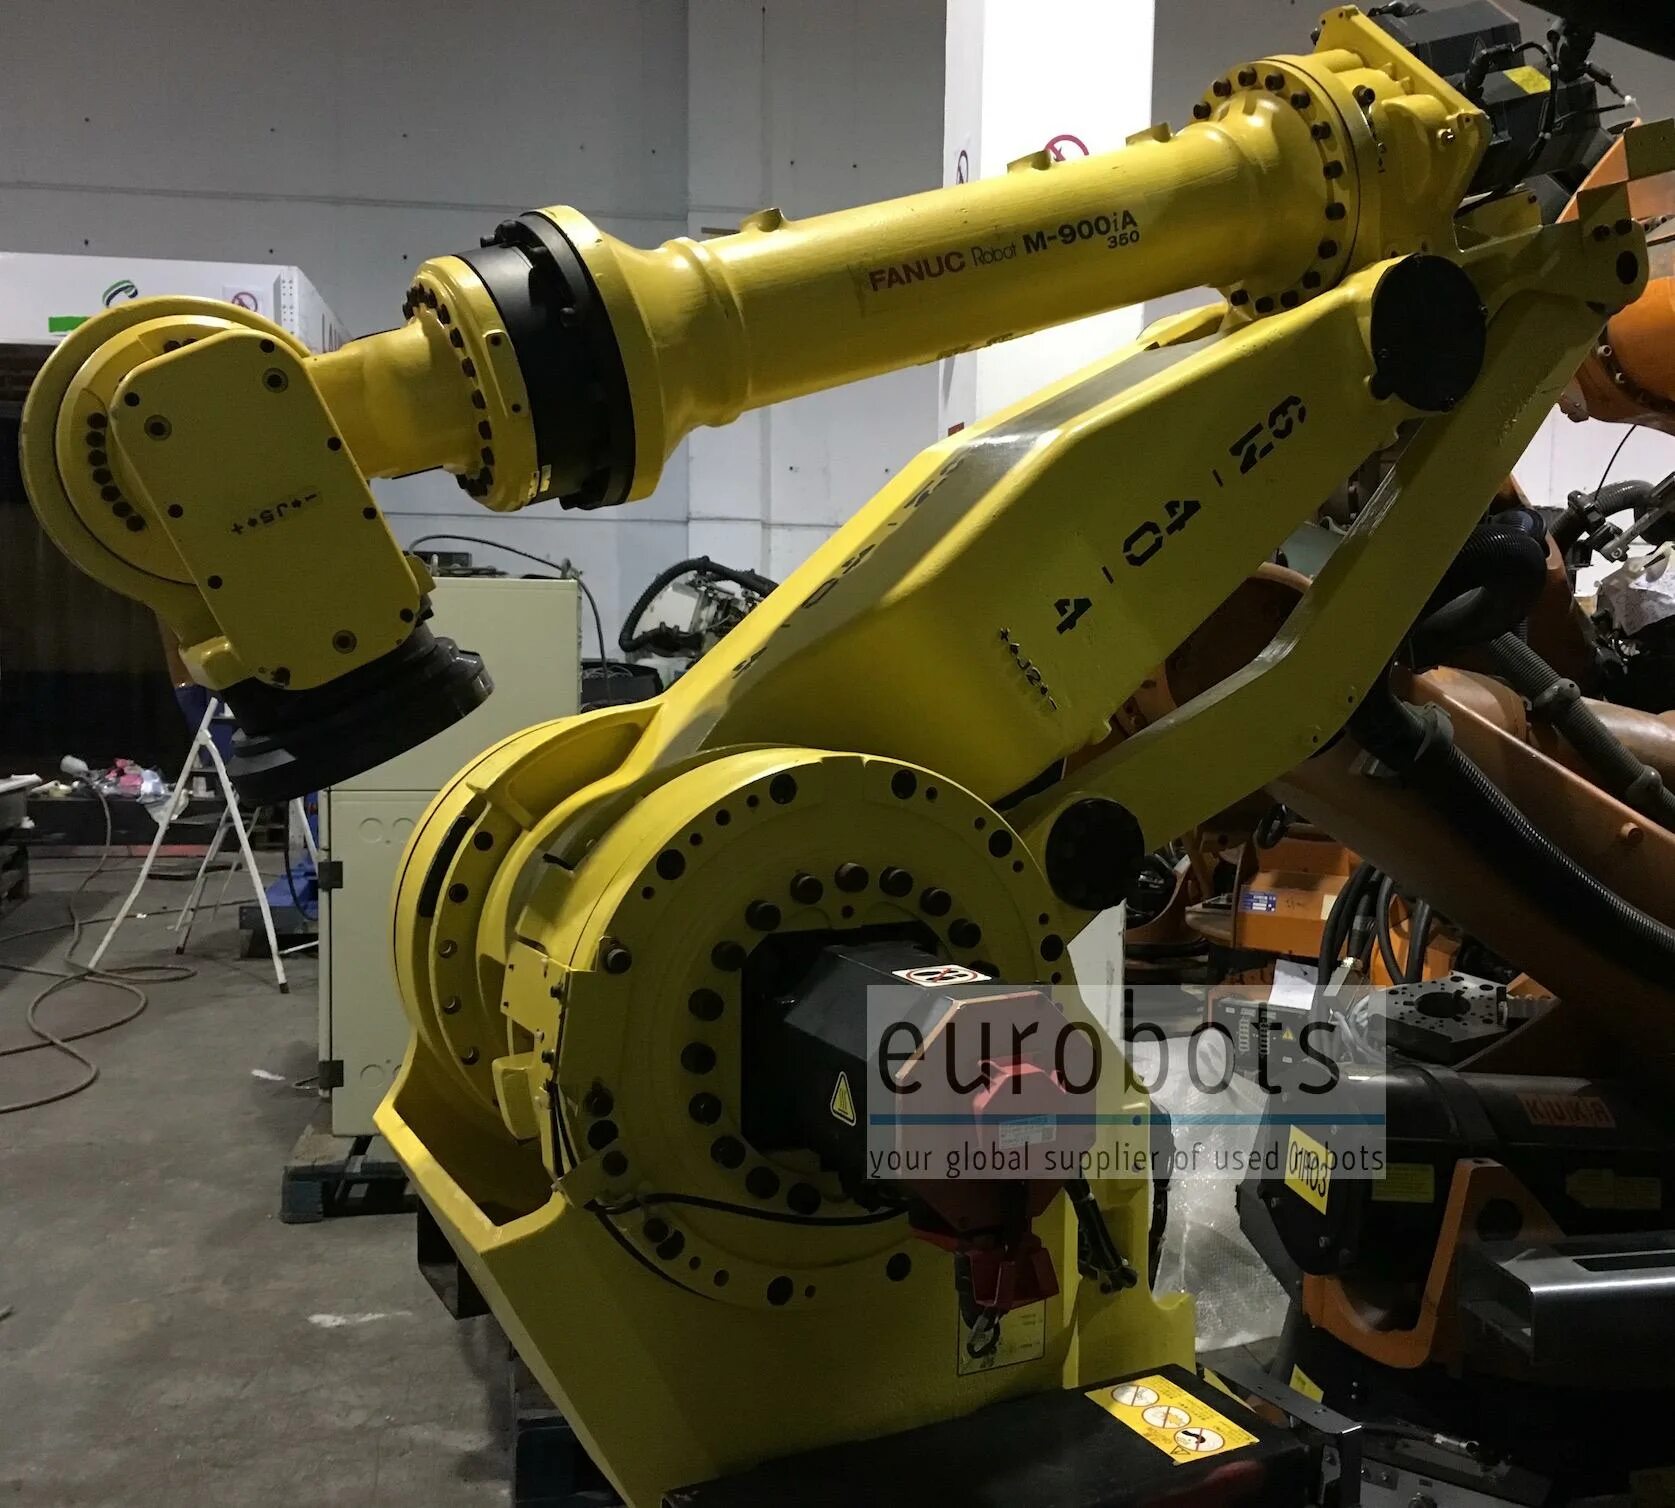 Robot m30 pro. Fanuc m-900ia/350. Промышленный робот Fanuc m-900ib/280l. P-350ia/45 робот. M-900ib/360.